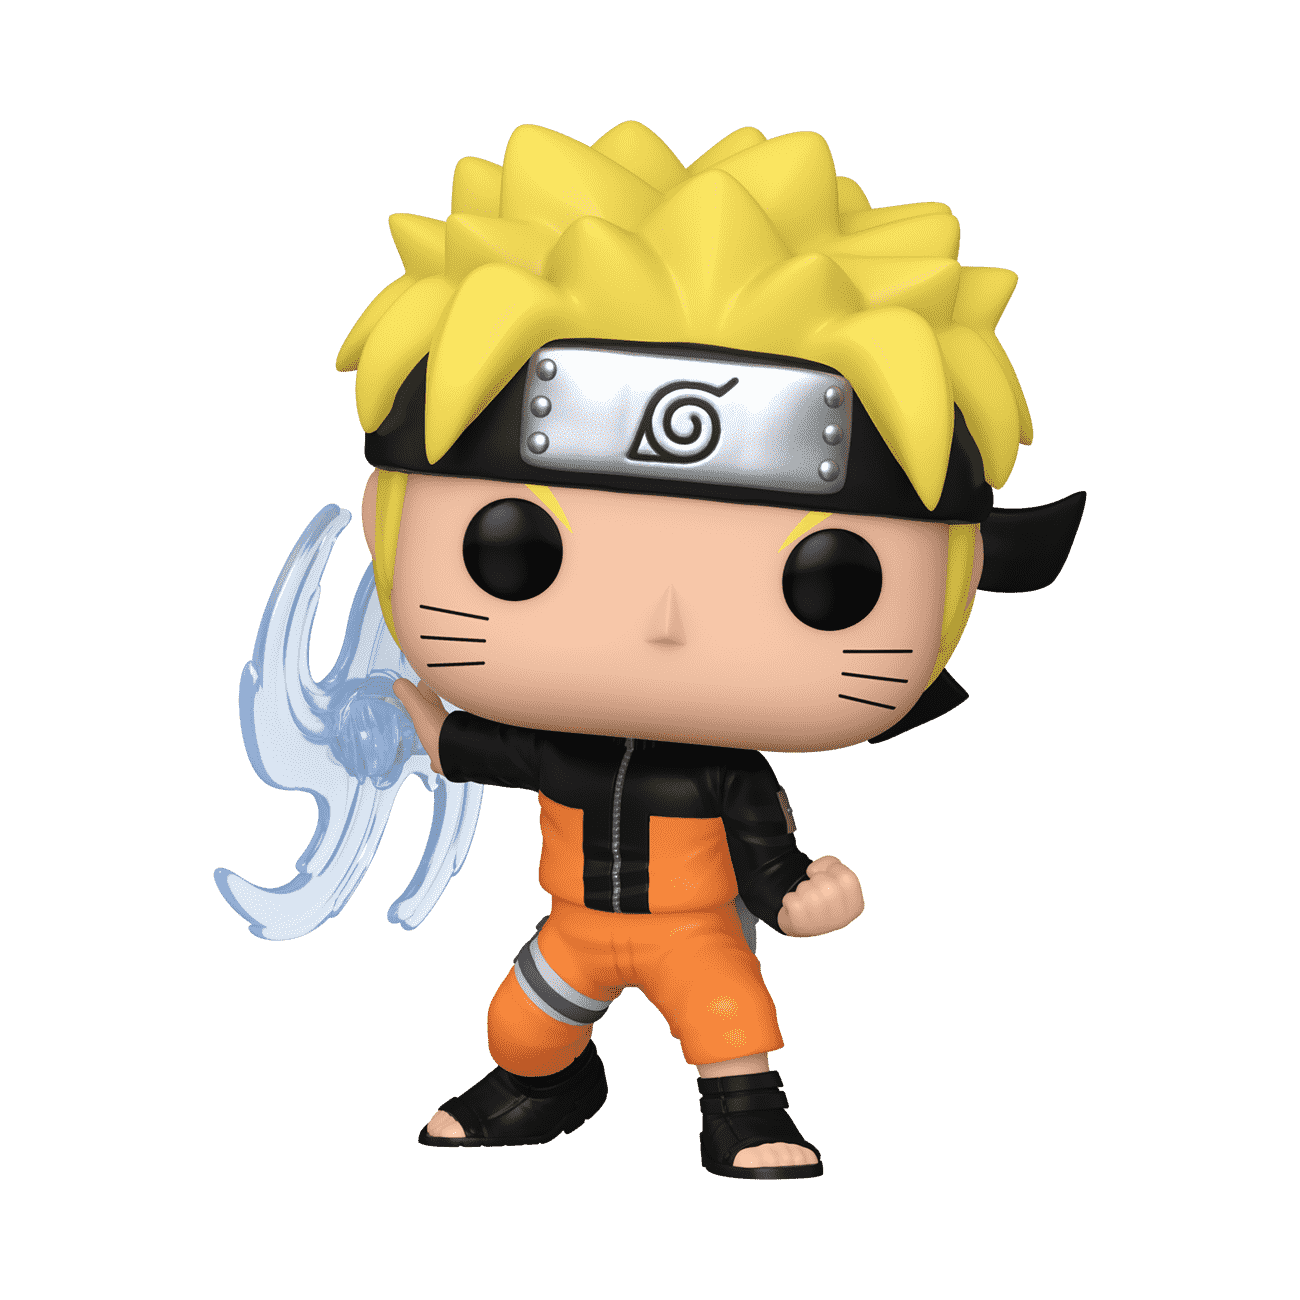 hokage naruto character model - Google Search  Naruto uzumaki, Naruto,  Naruto uzumaki hokage